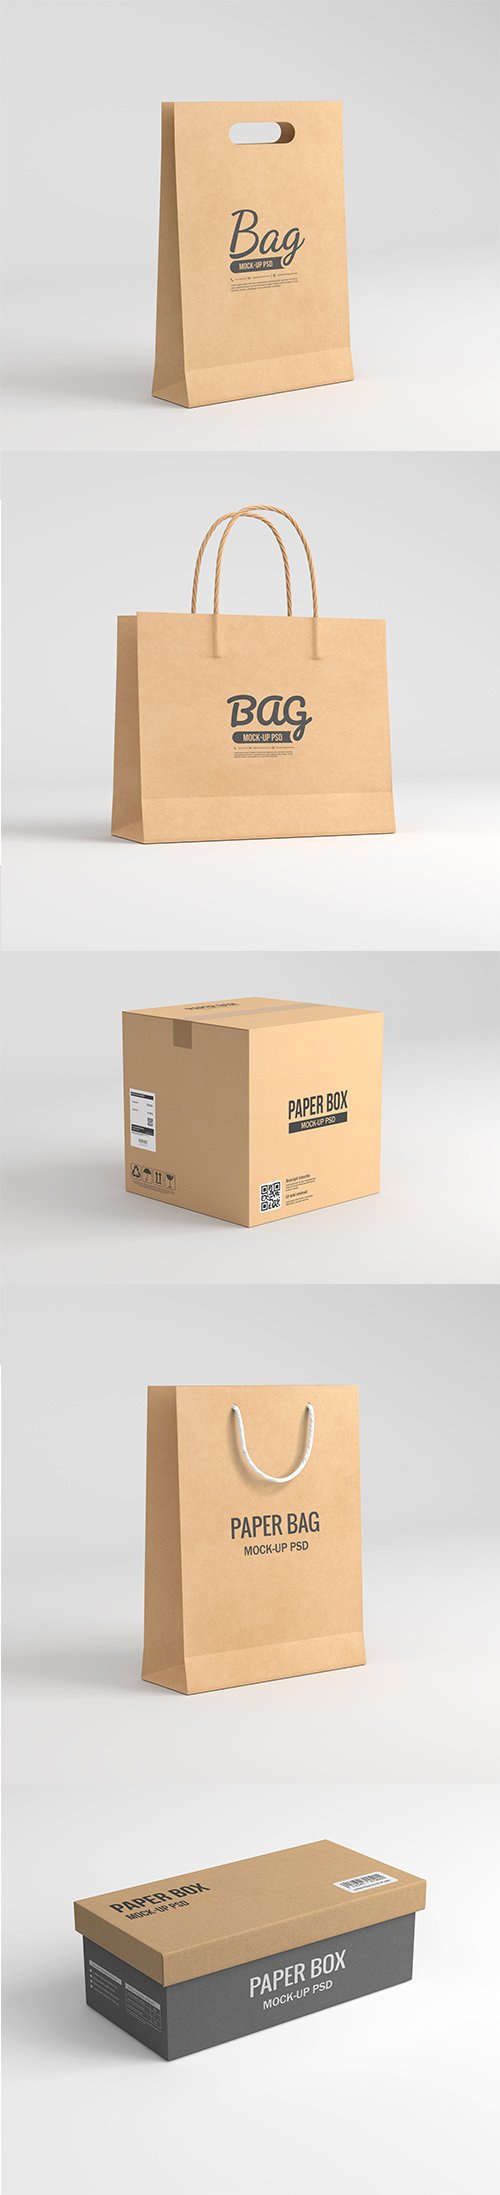 Set of Paper Bag and Box Packaging PSD Mockup